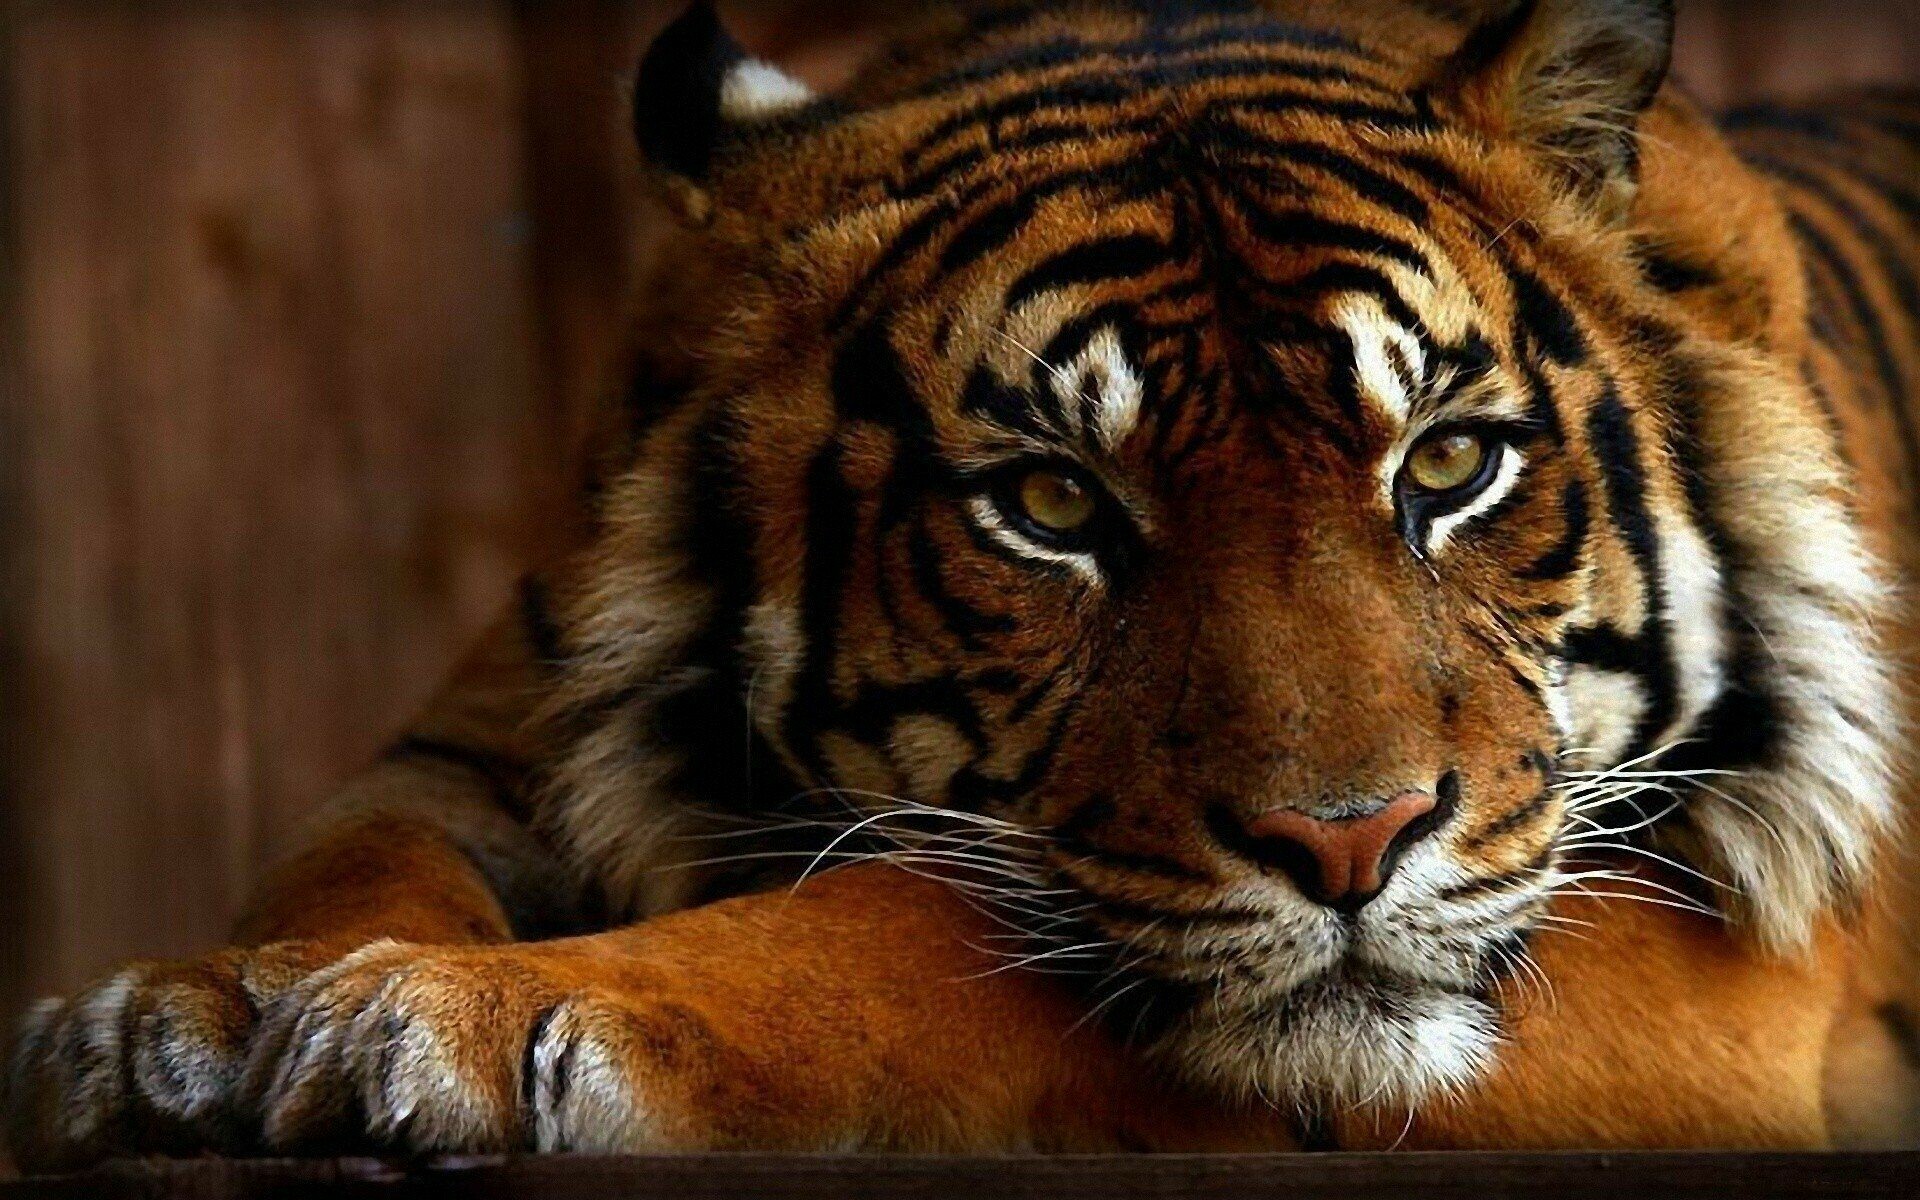 Tiger beauty, HD and 4K wallpapers, Striking visuals, Captivating imagery, 1920x1200 HD Desktop